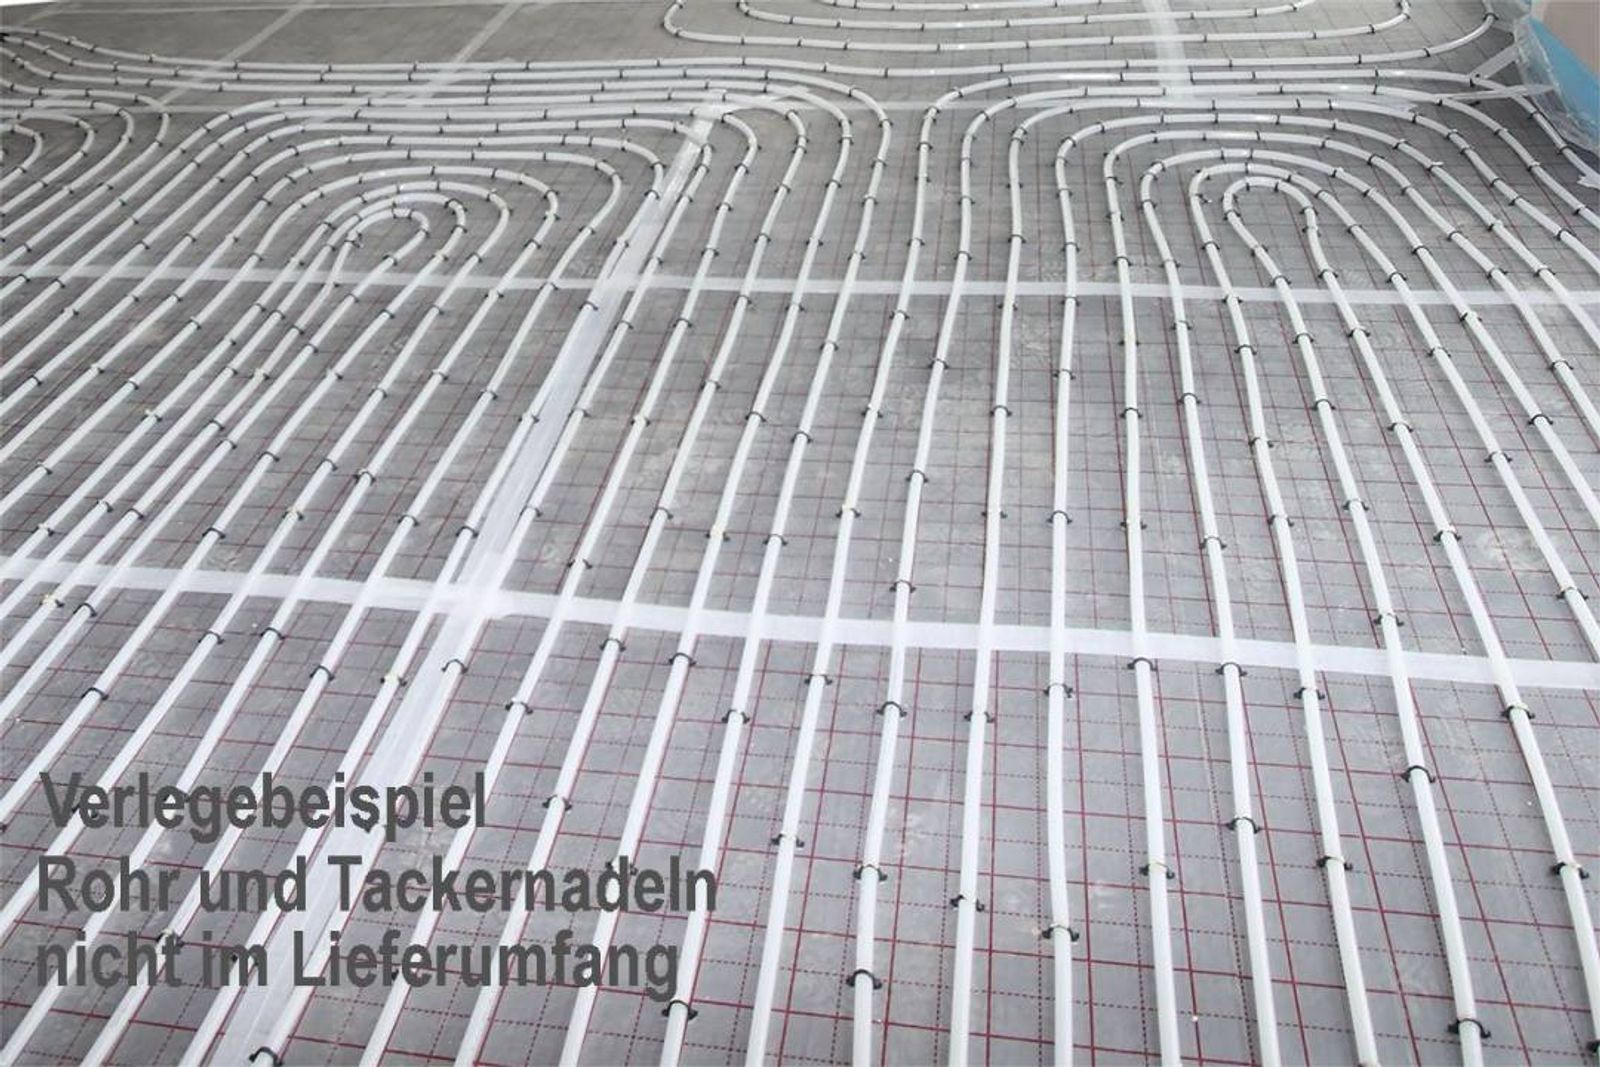 Fußbodenheizung 15 mm Tackersystem Tackerplatte Faltplatte 15-2 WLG 045 10 m²